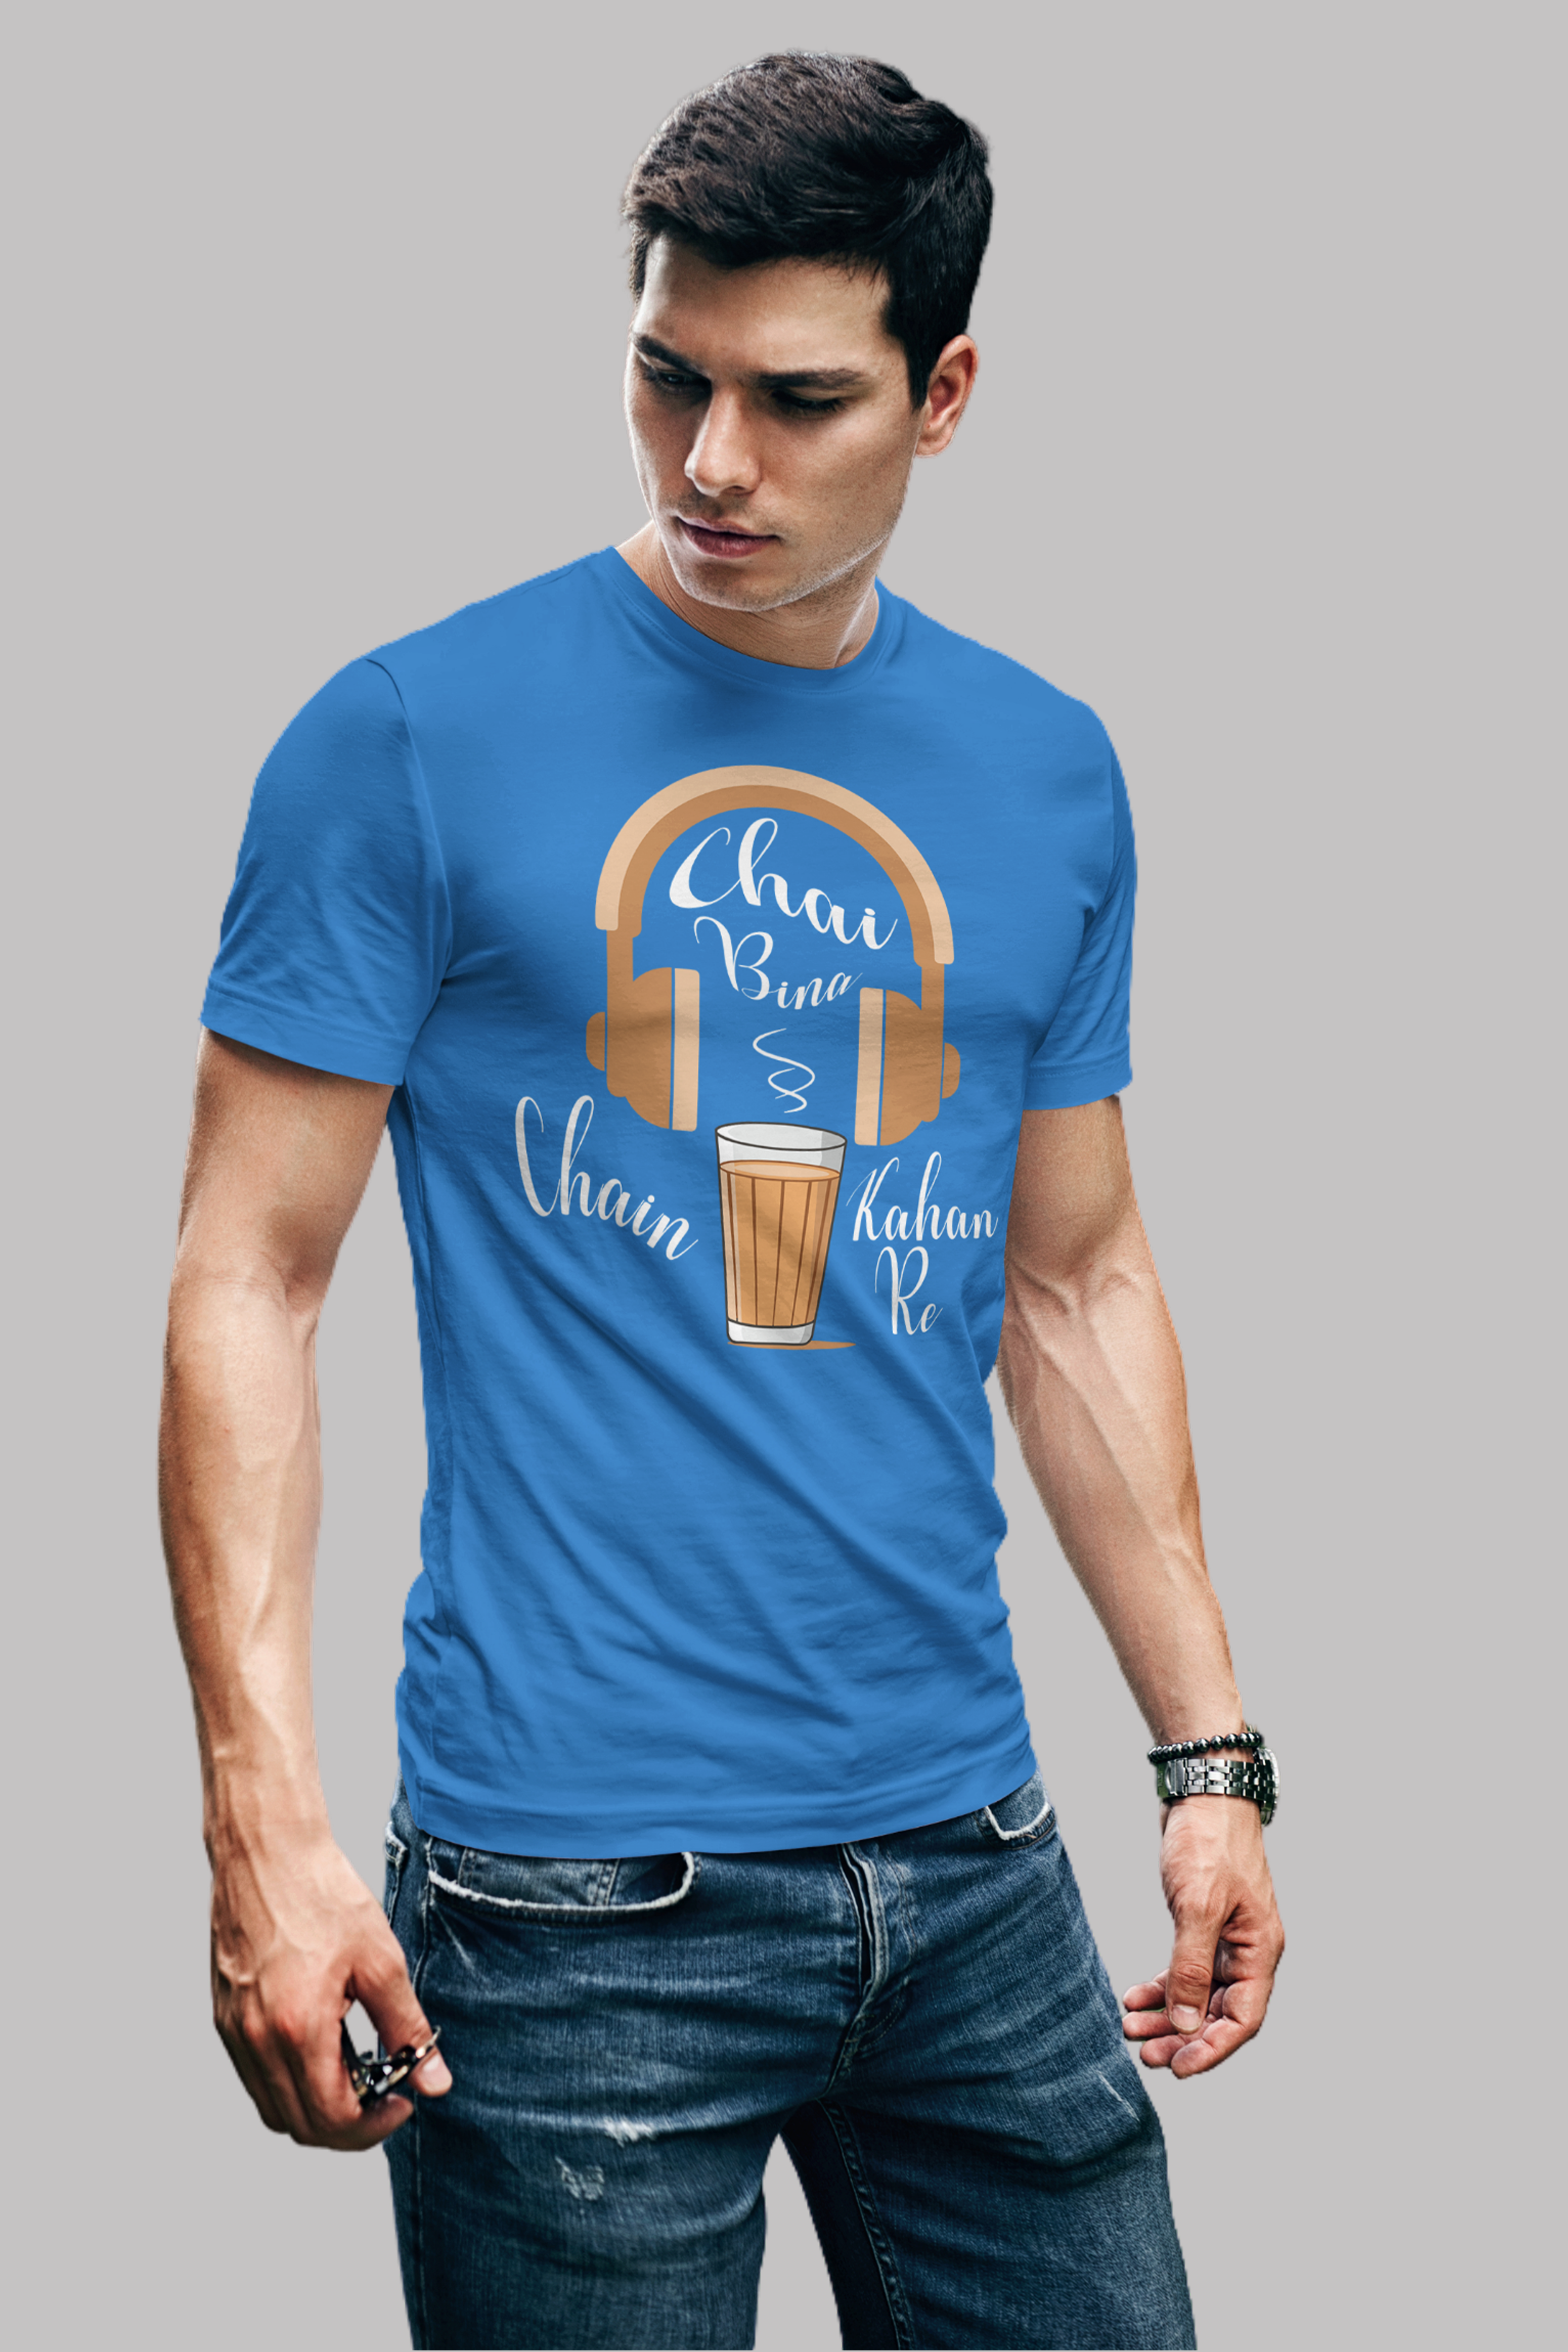 Chai bina chain kaha re Printed Half Sleeve Premium Cotton T-shirt For Men